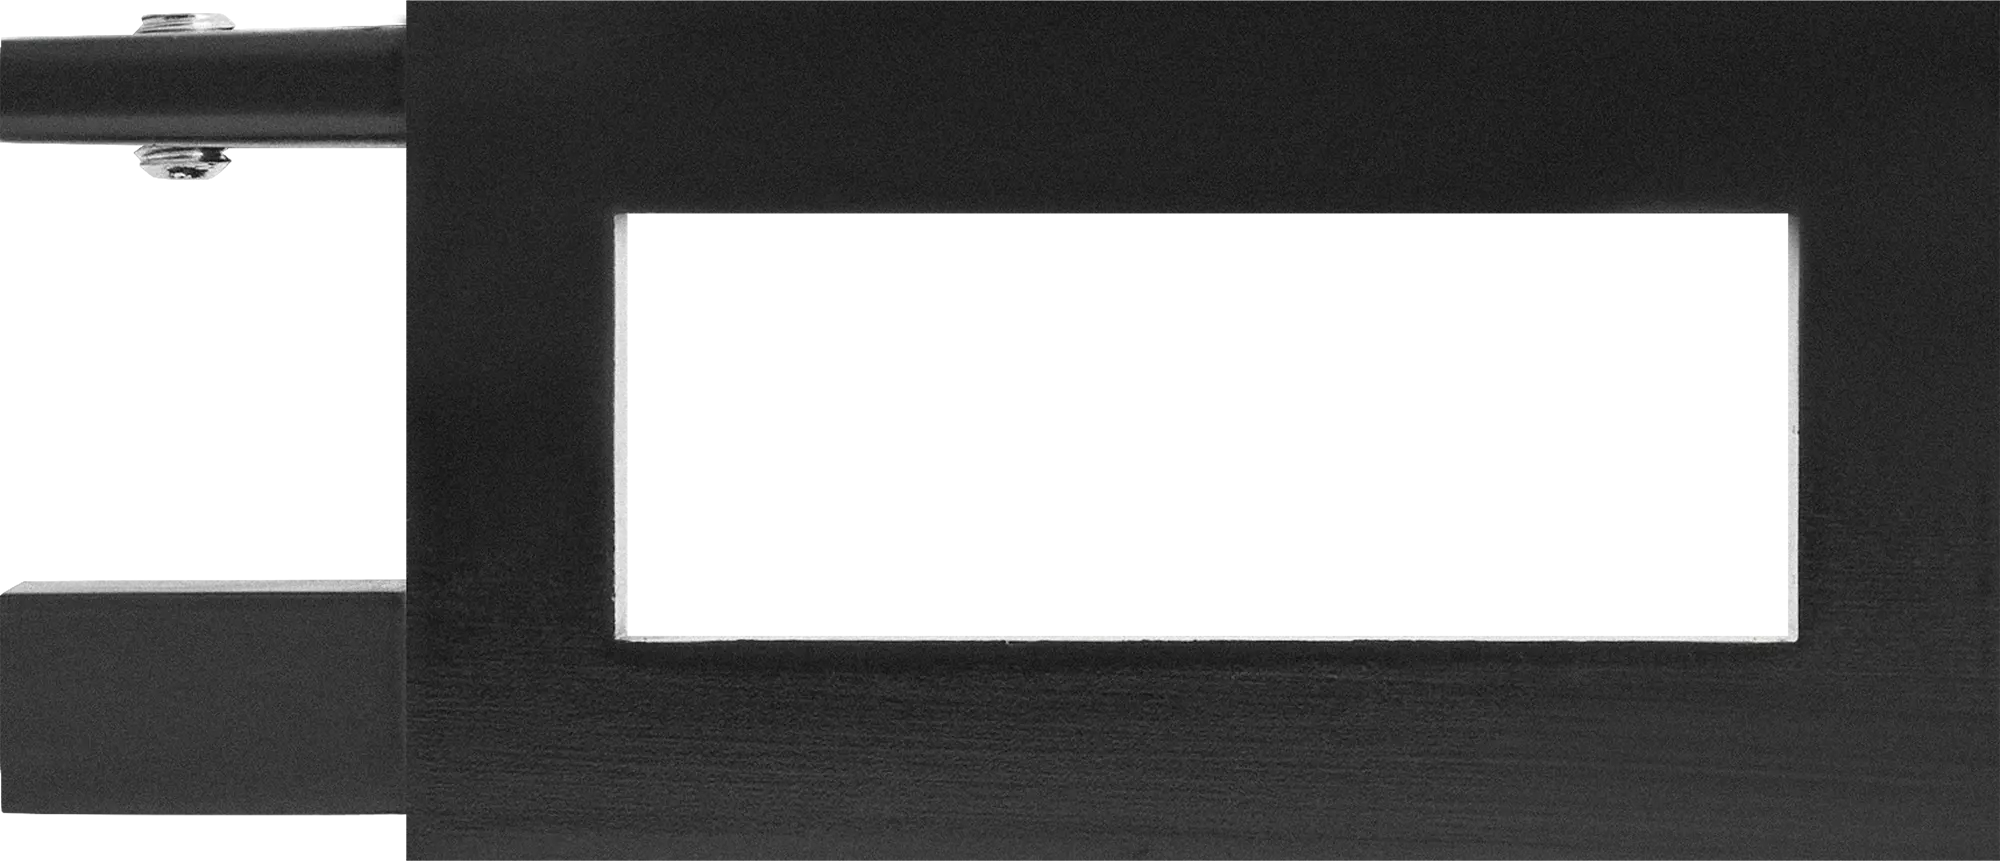 Наконечник Квадро Симпл Inspire металл цвет черный 4 см 2 шт. шкаф купе симпл стандарт ясень анкор светлый 2100 мм